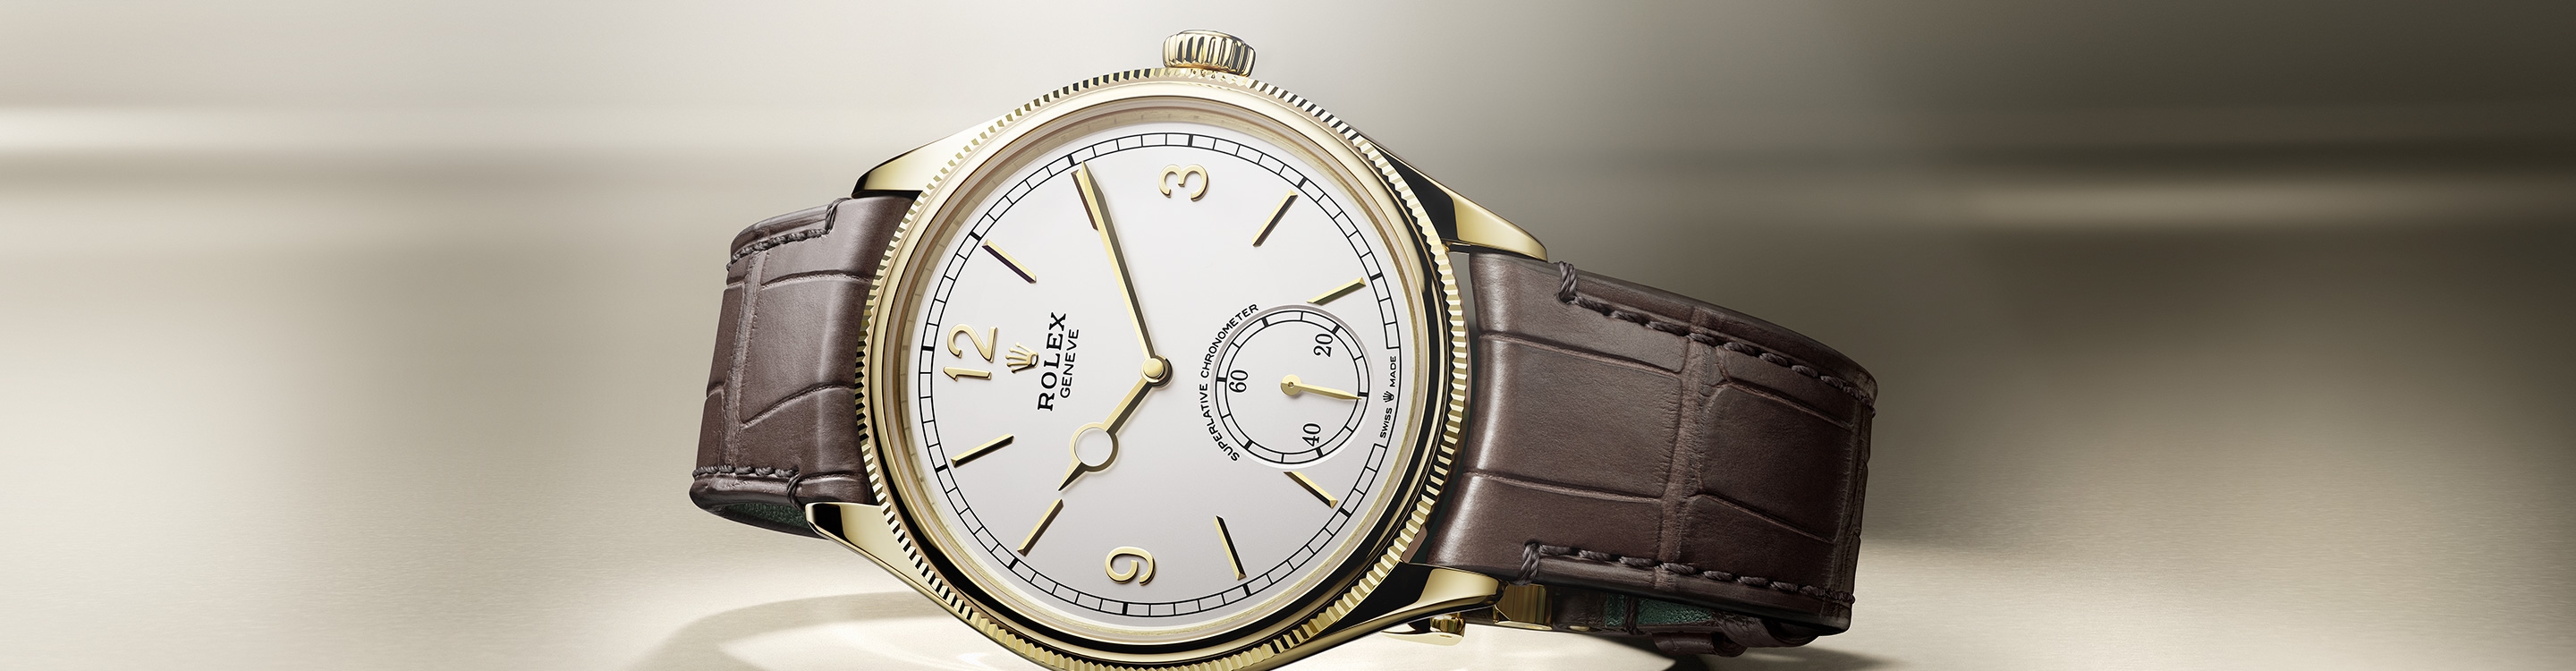 Rolex 1908 in Gold, M52508-0002 | Europe Watch Company